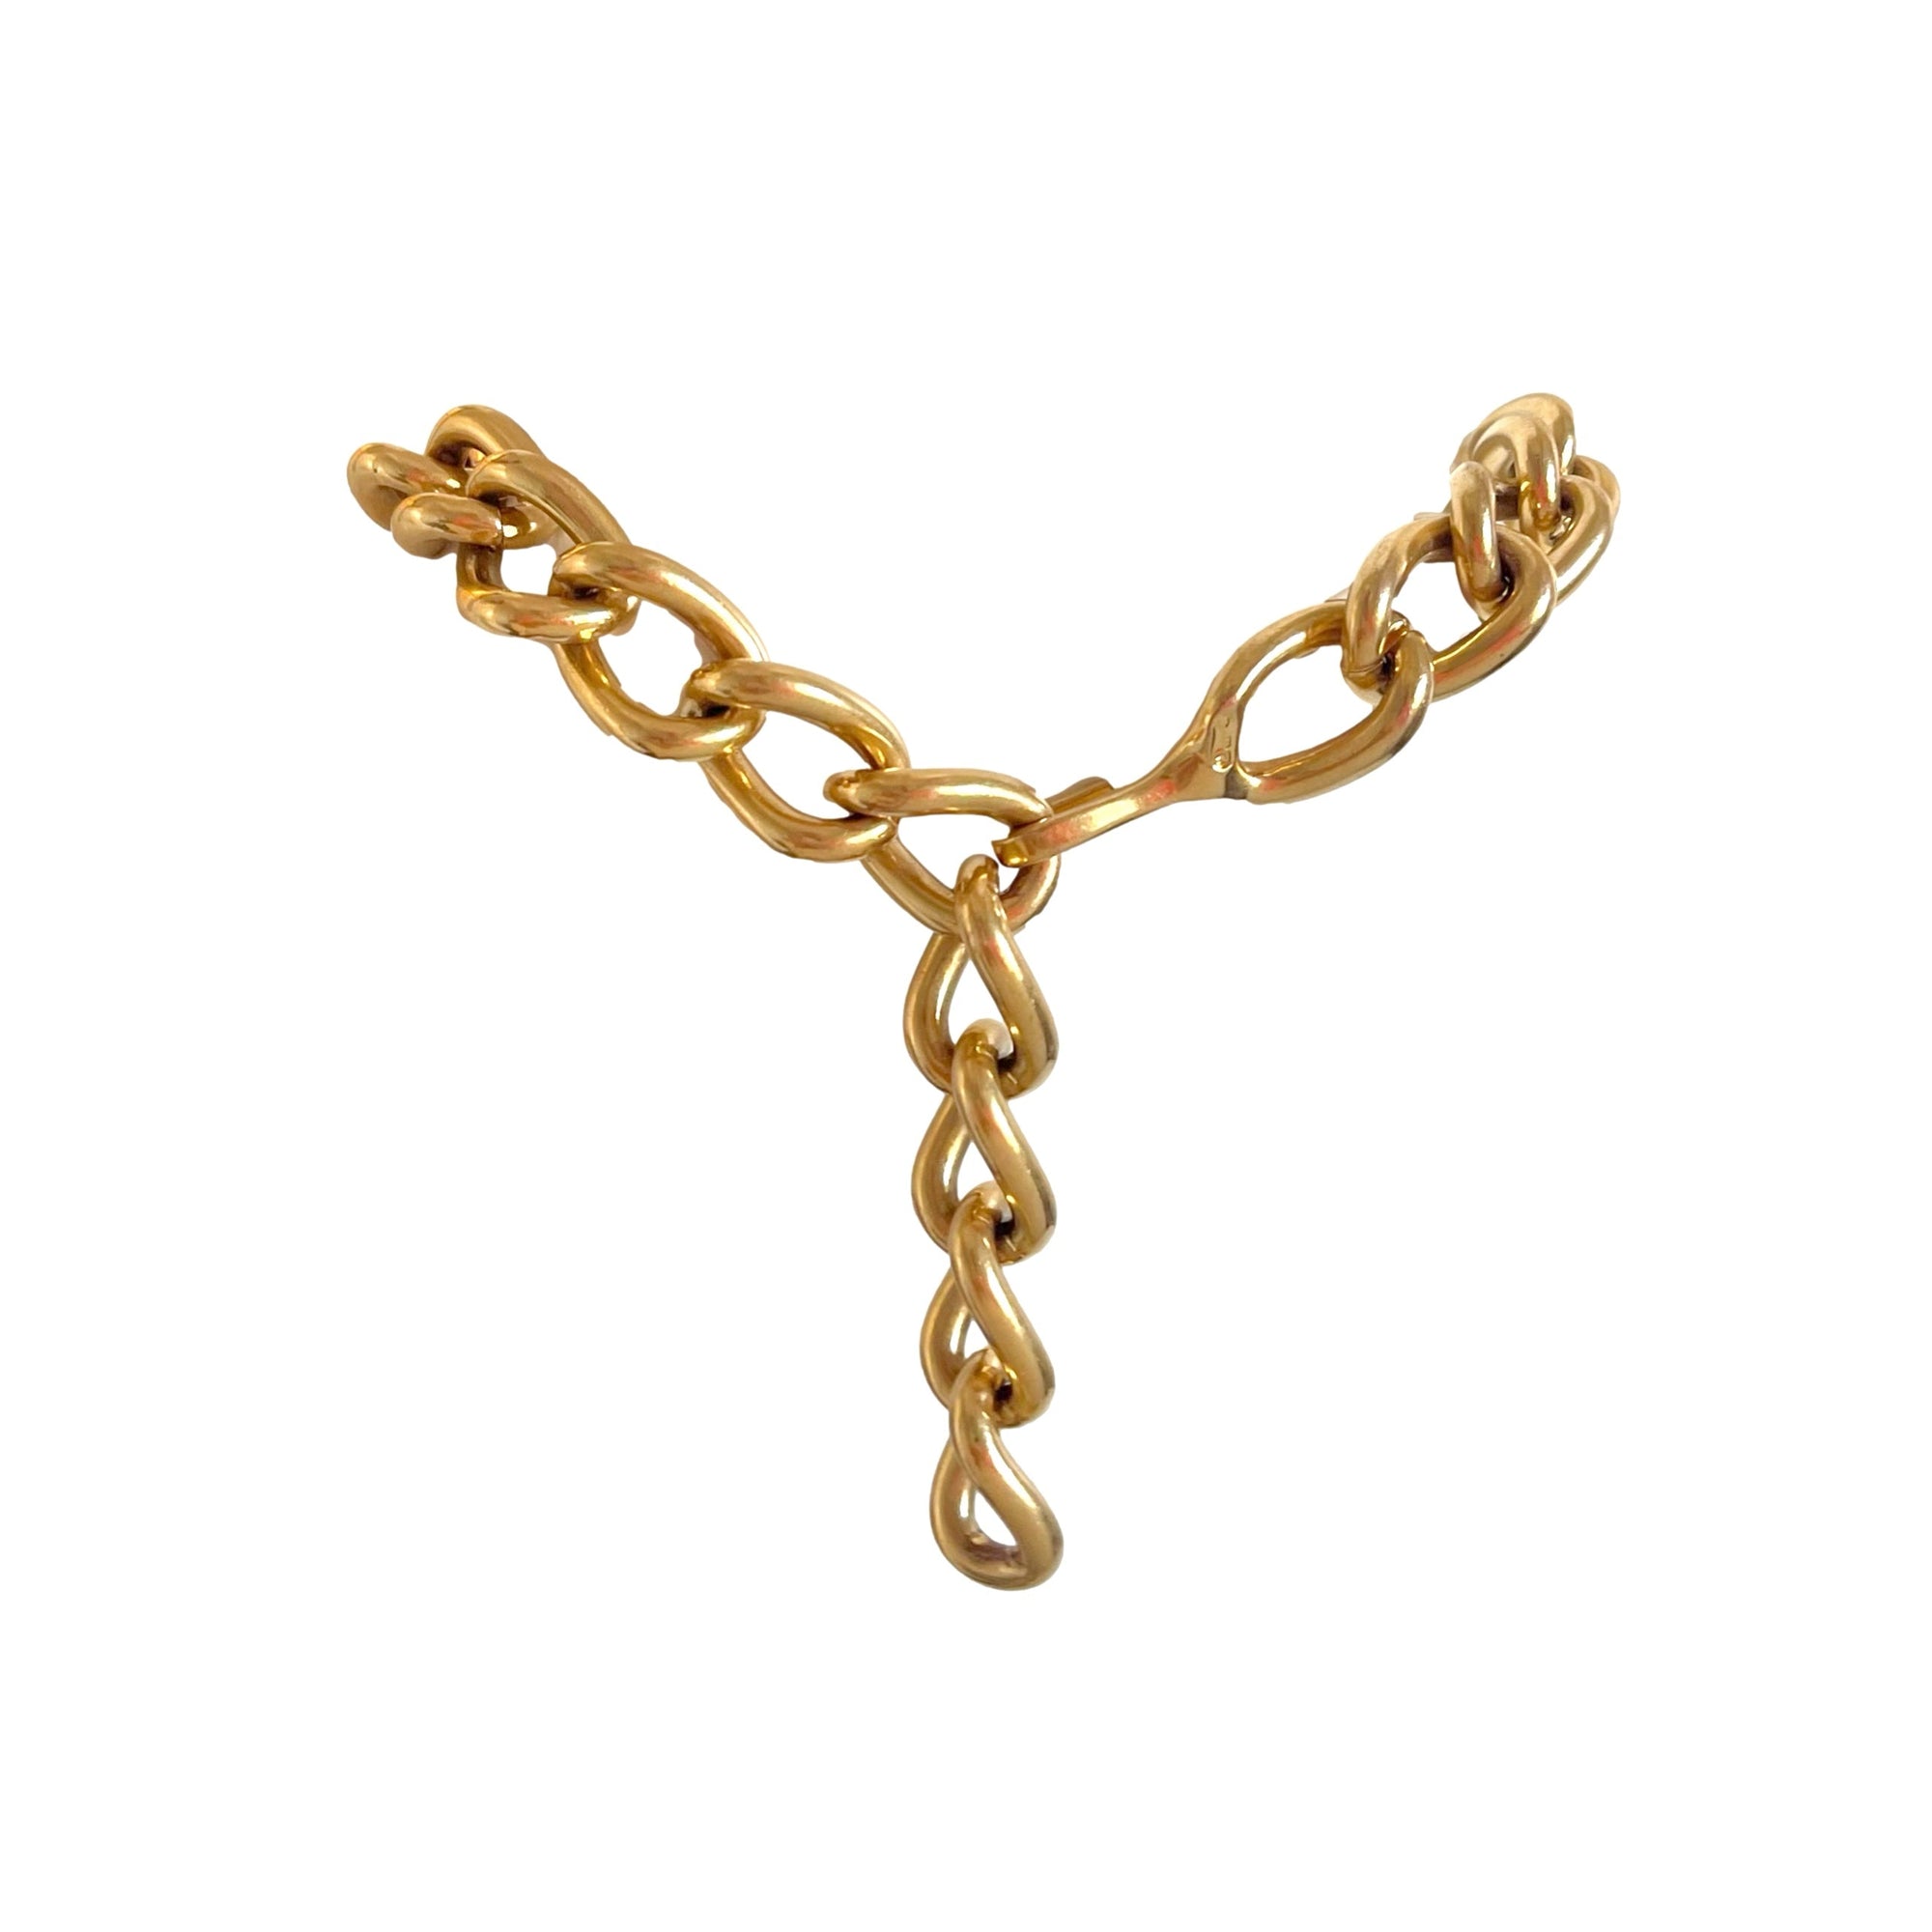 Dior Gold Logo Jumbo Choker - Jewelry